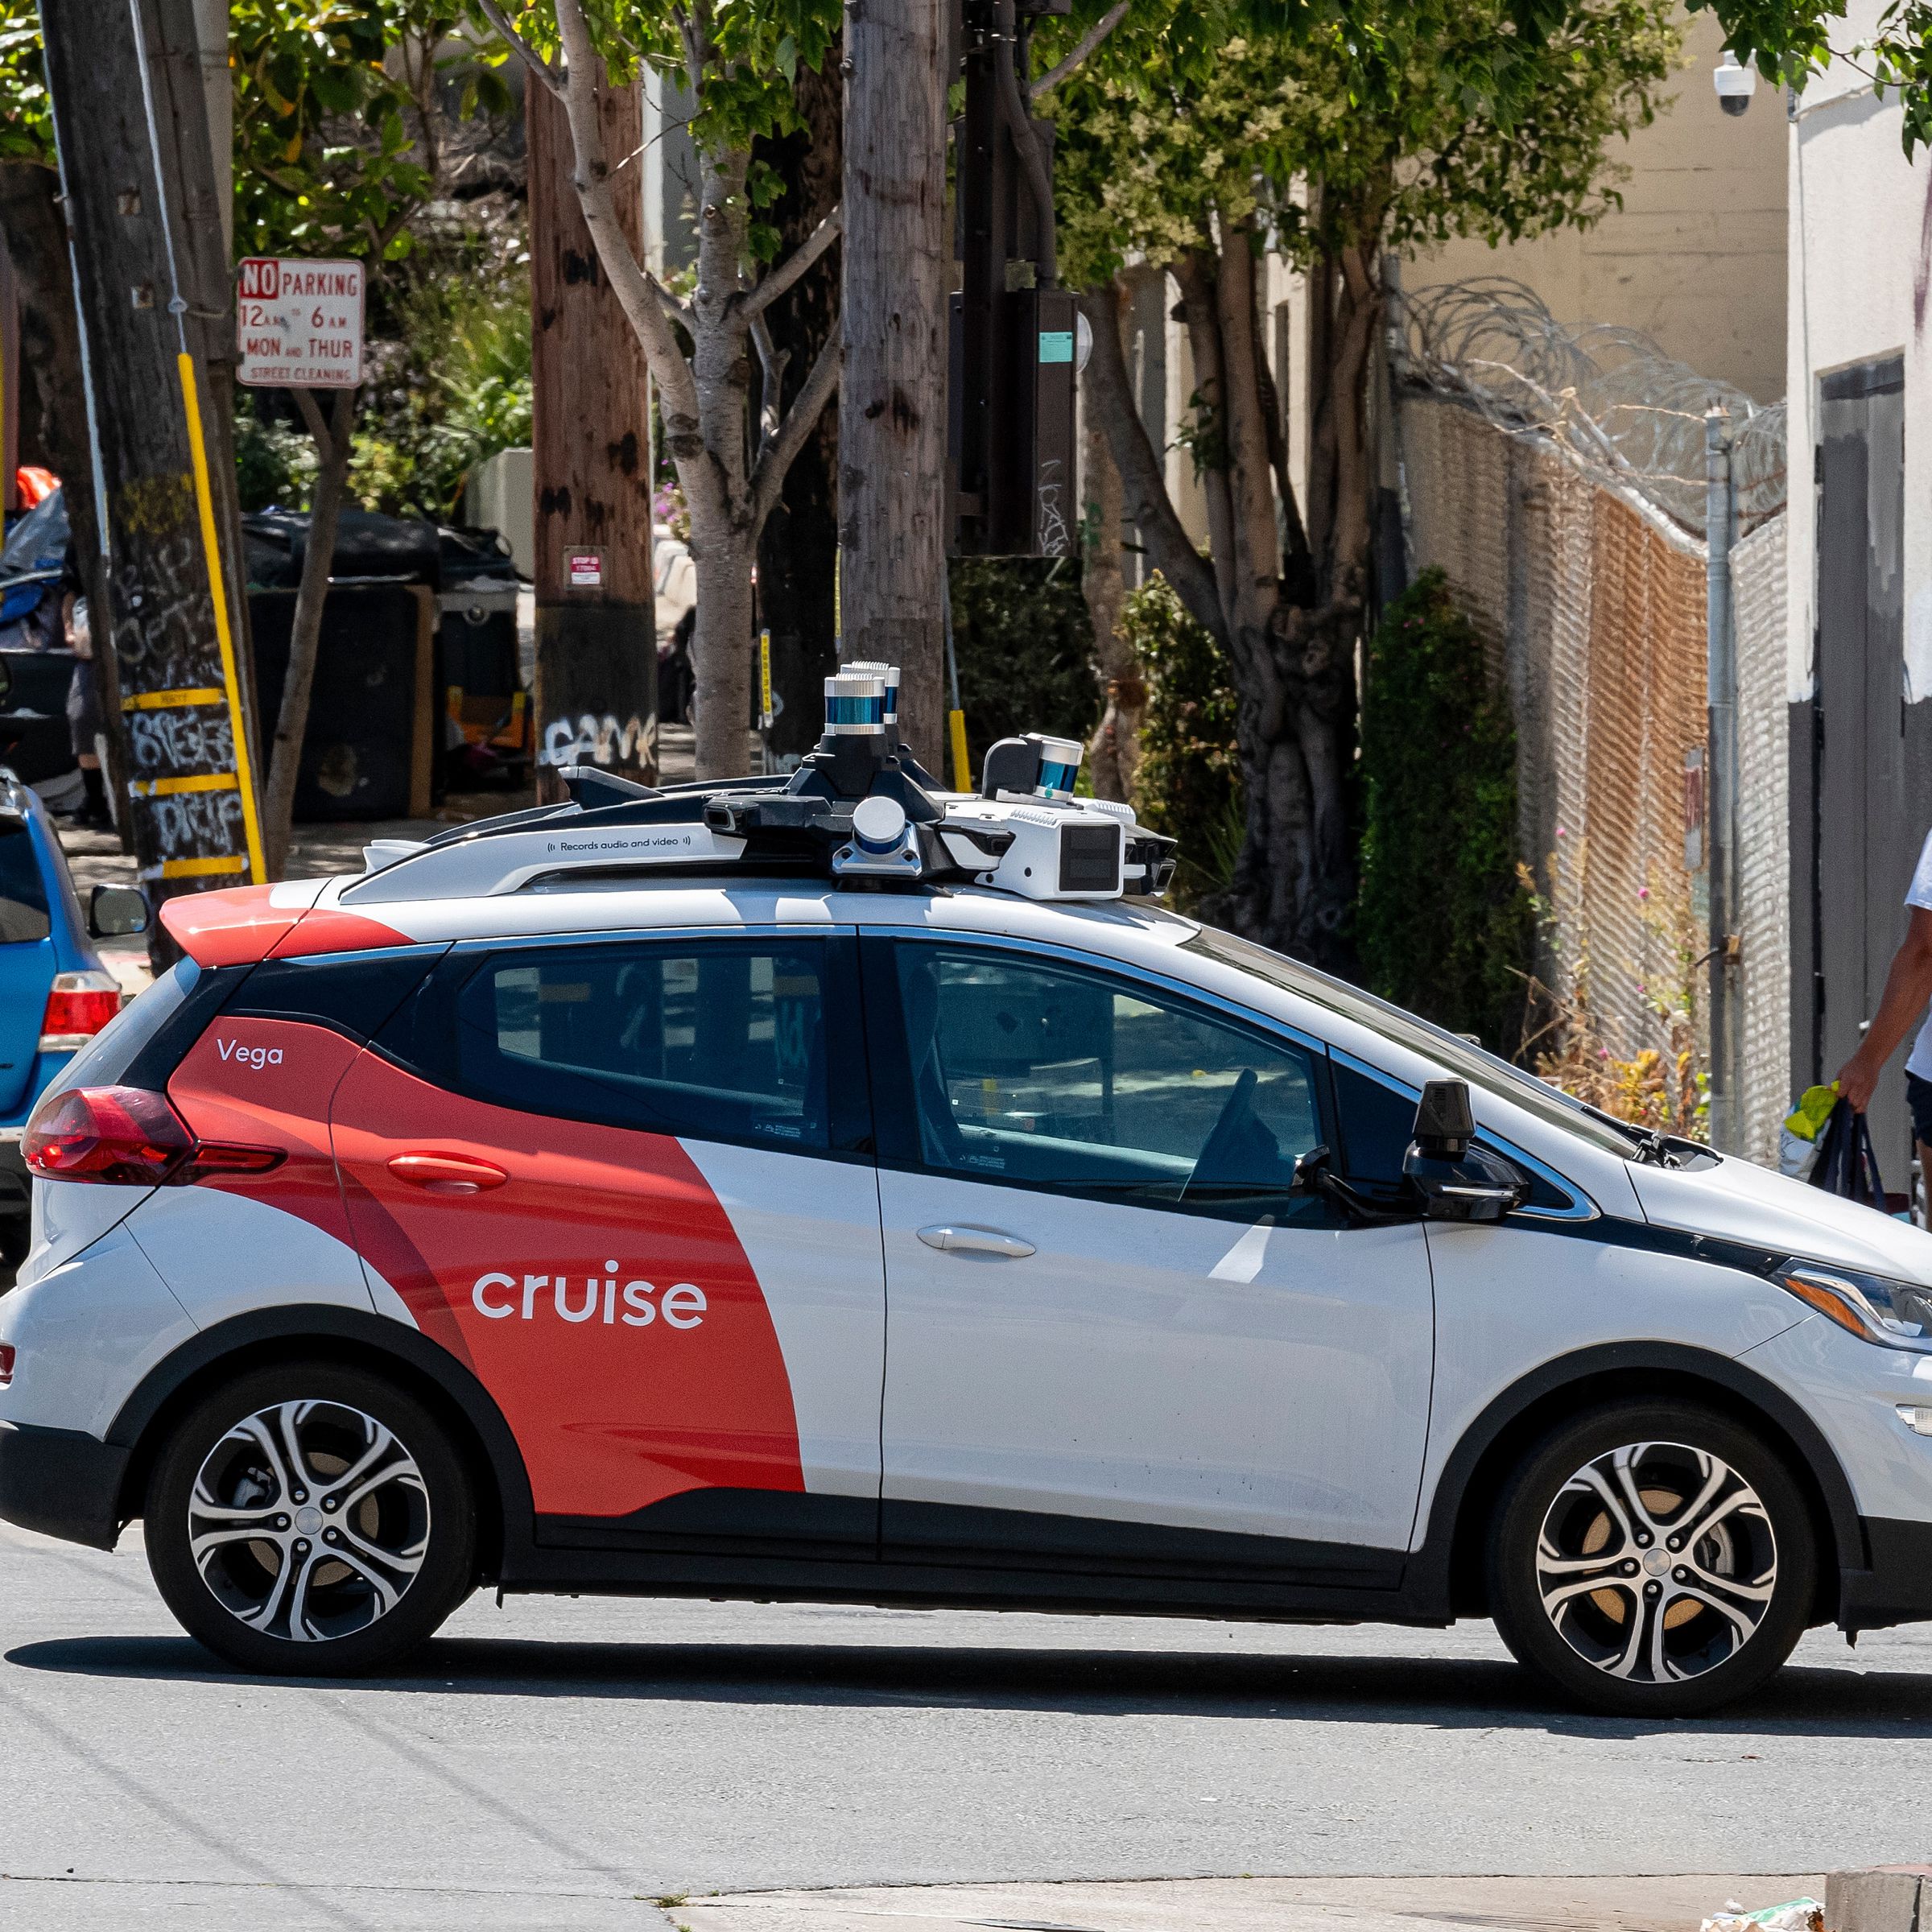 Cruise driverless robotaxi autonomous vehicle in San Francisco